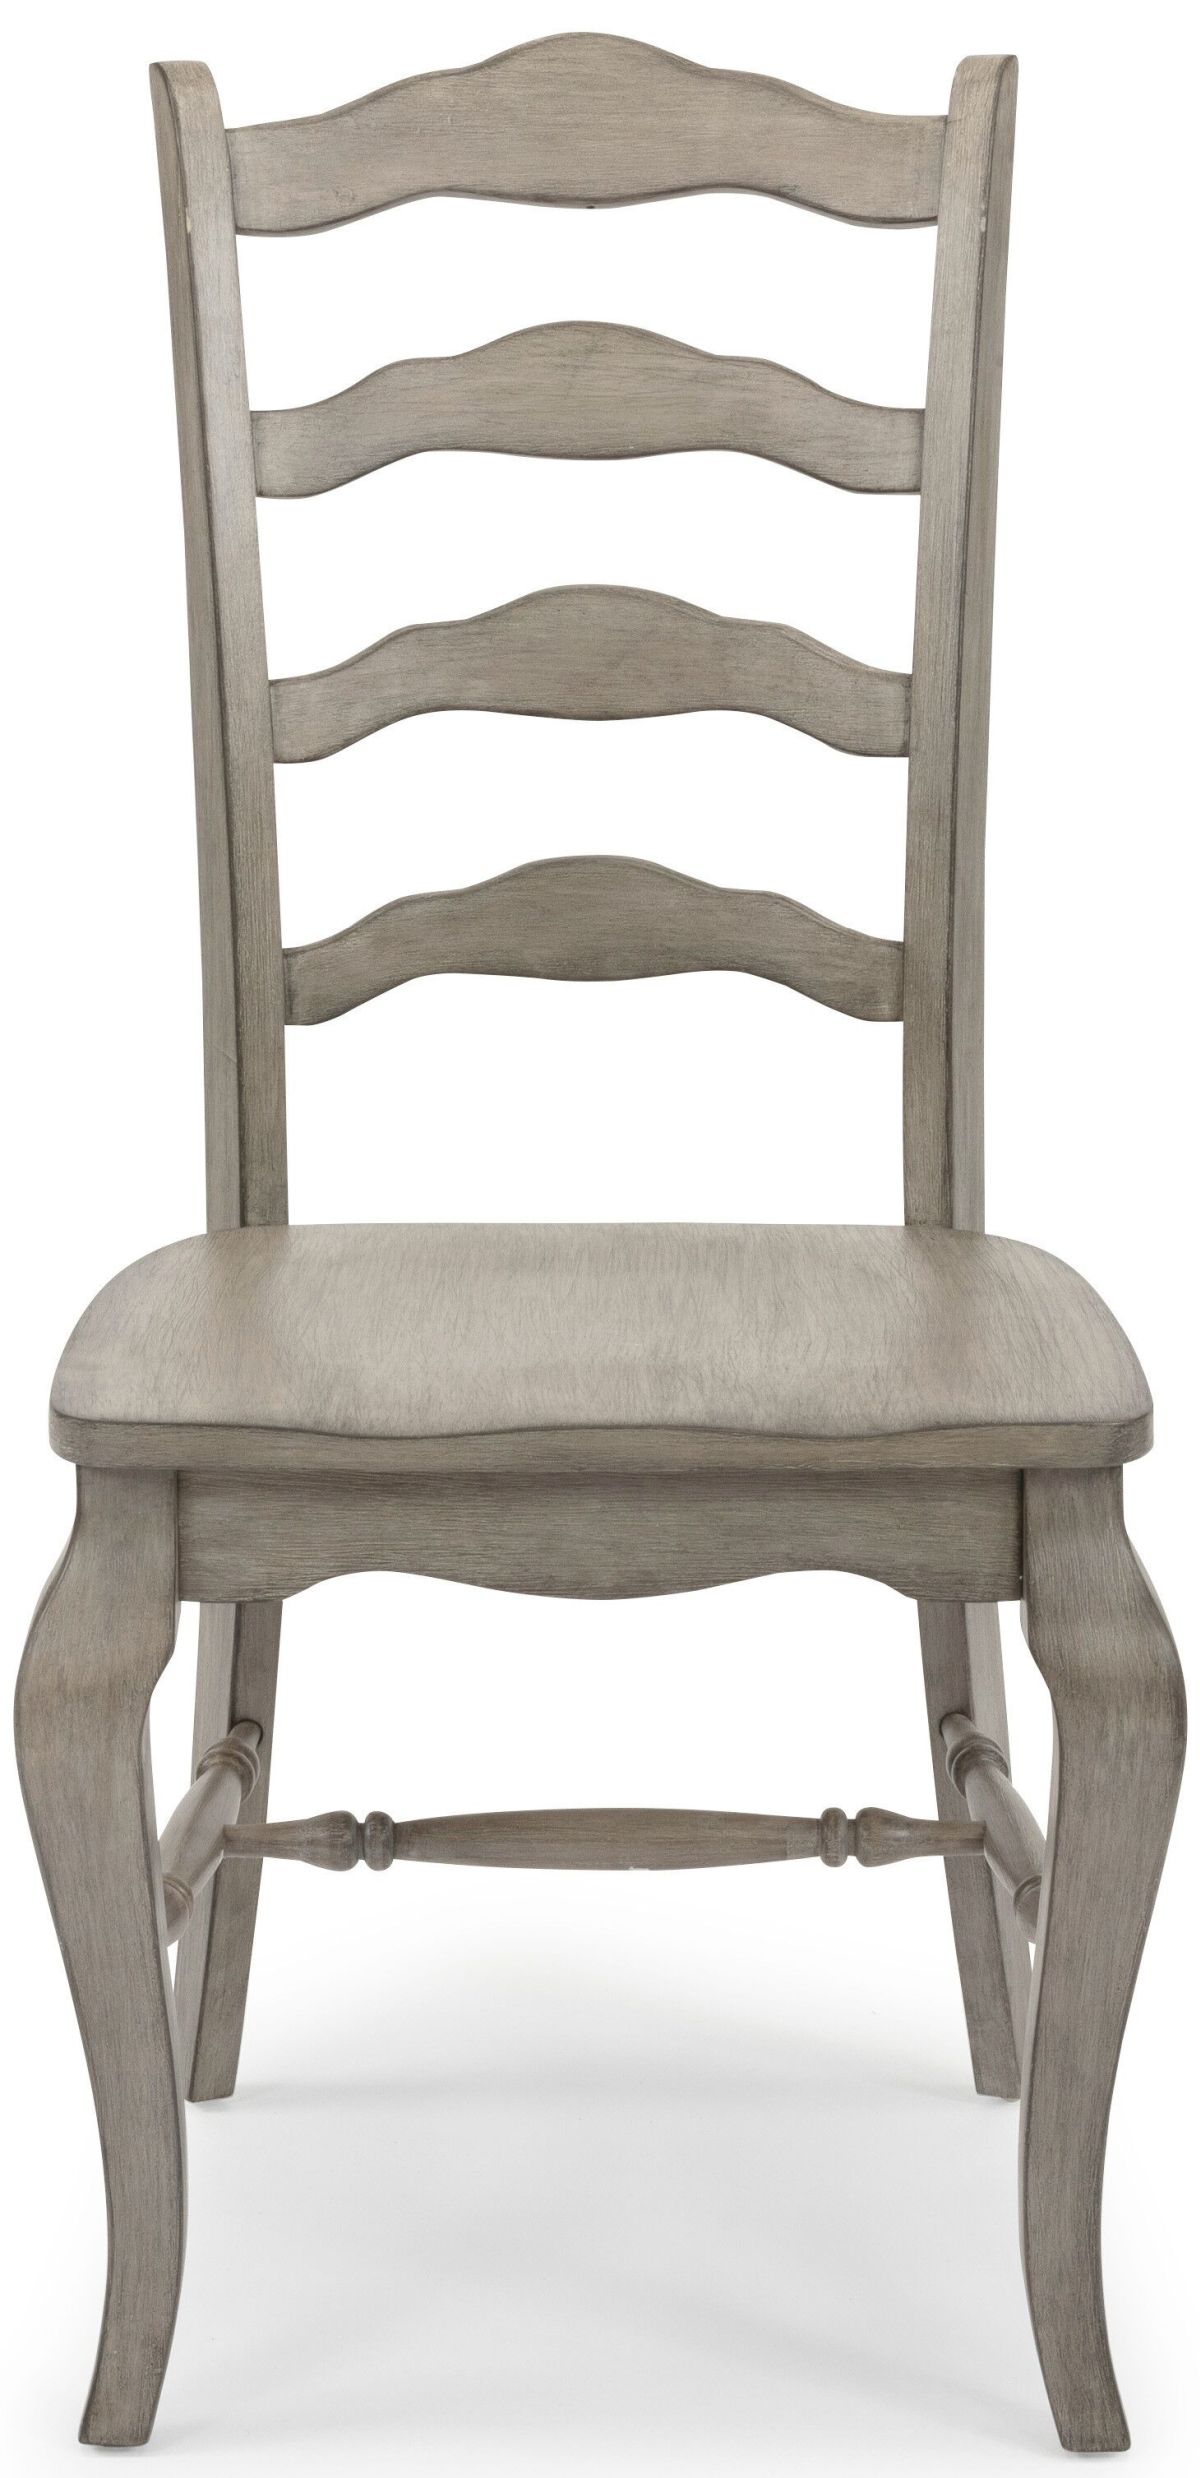 homestyles® Walker Gray Chair